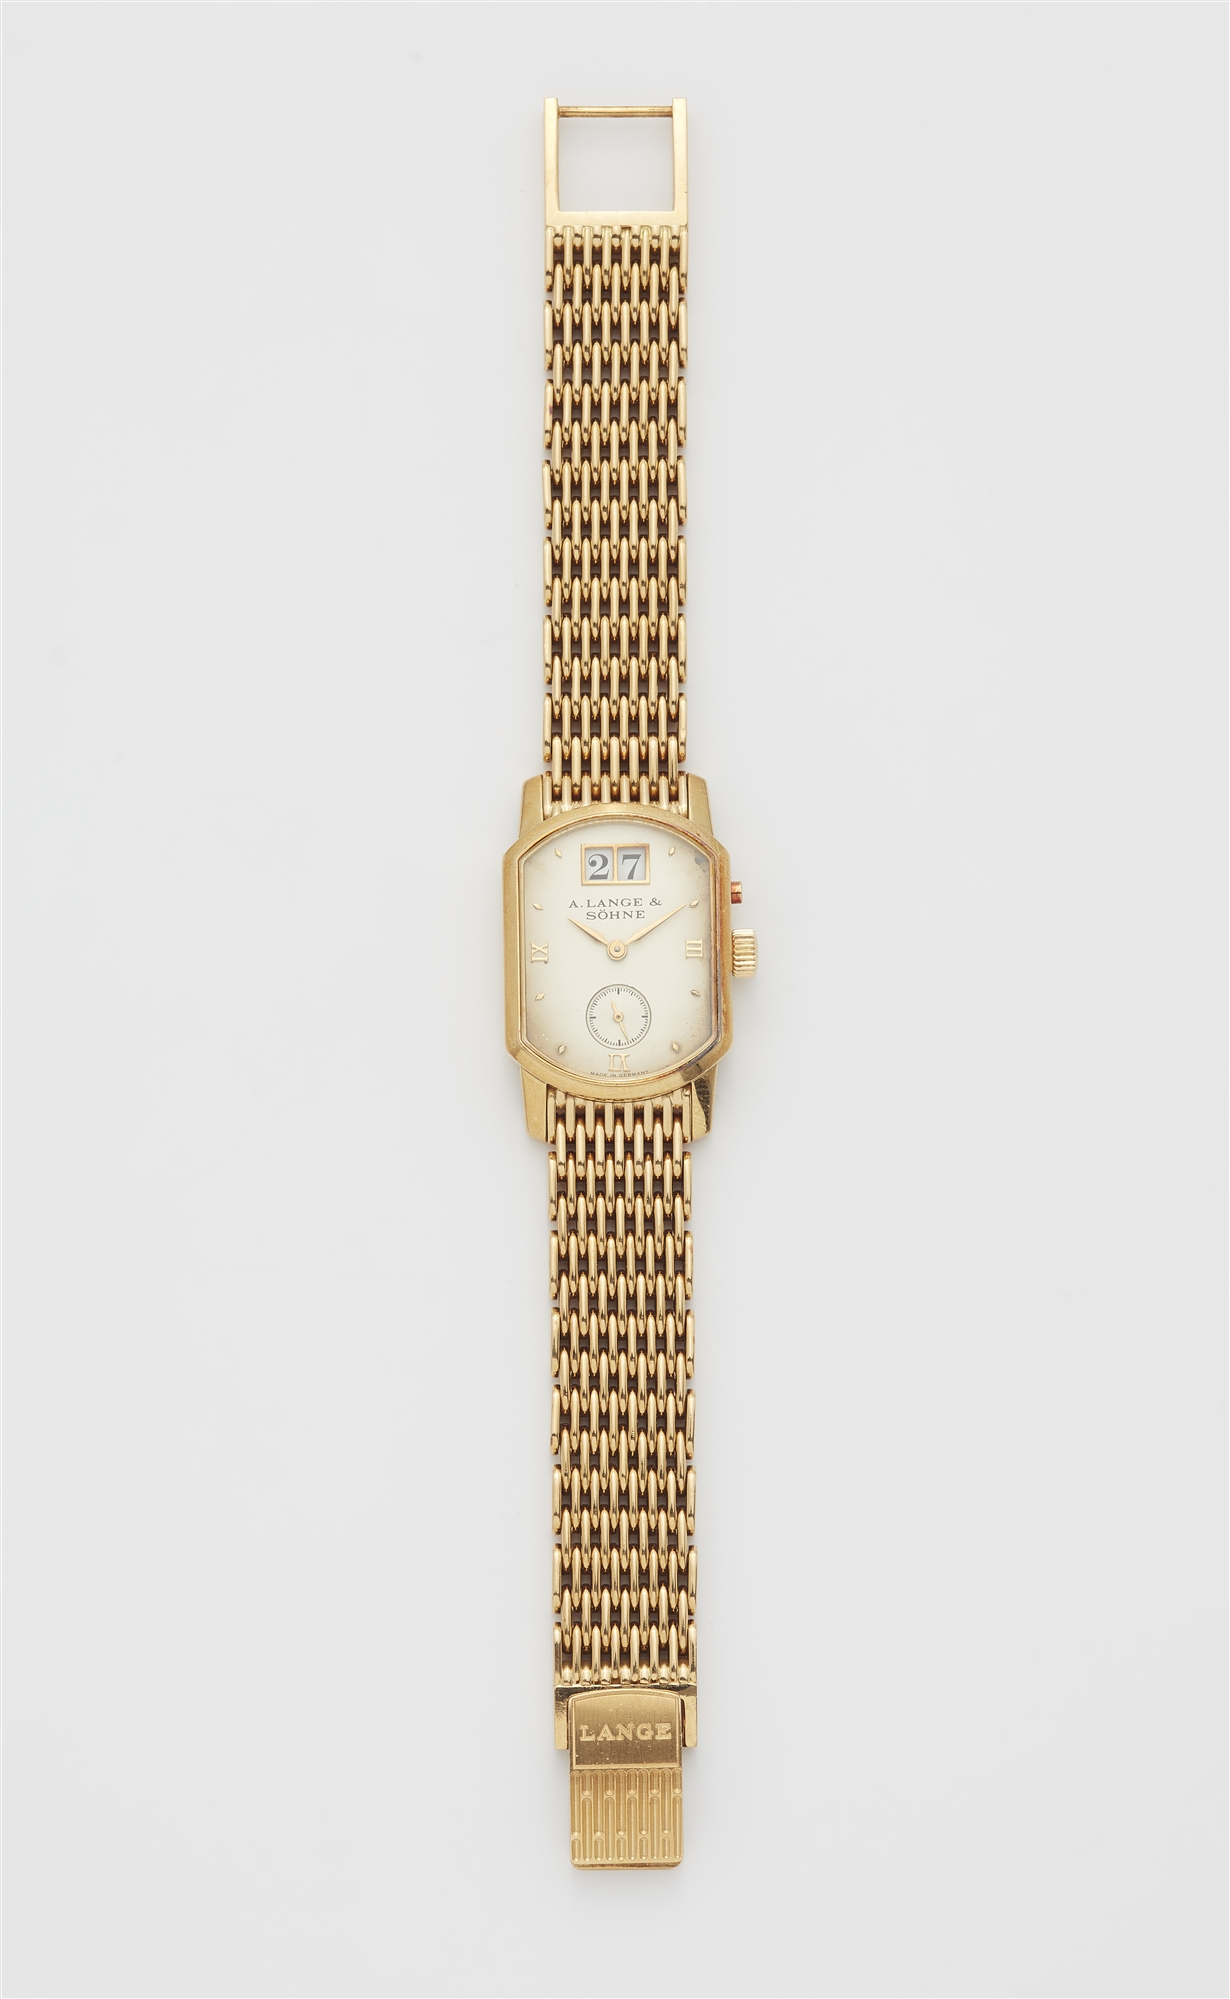 An 18k yellow gold A. Lange & Söhne ladies wristwatch.